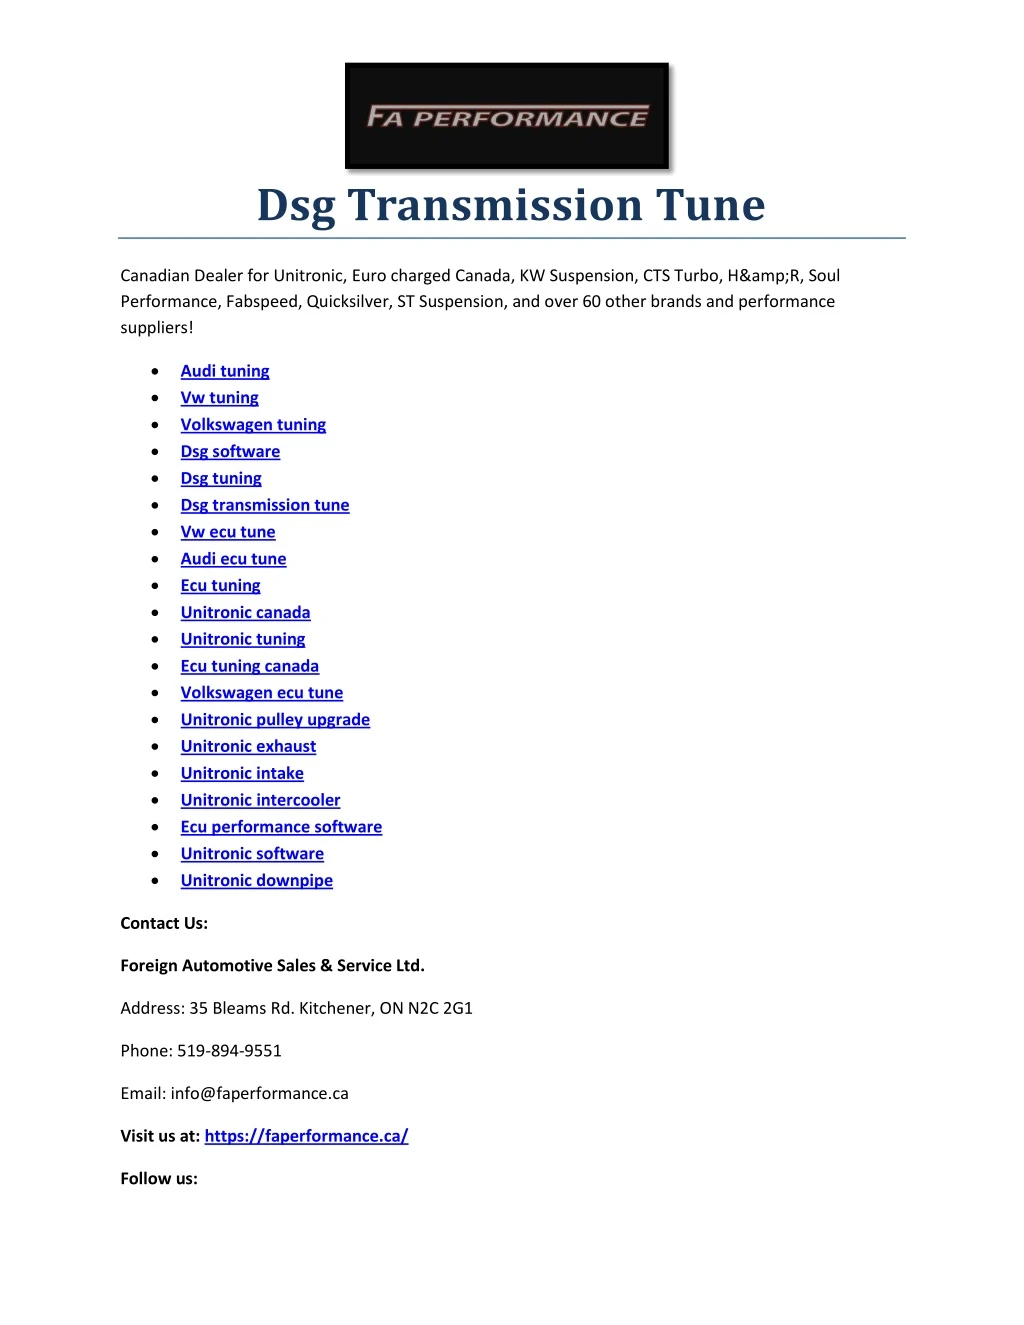 dsg transmission tune